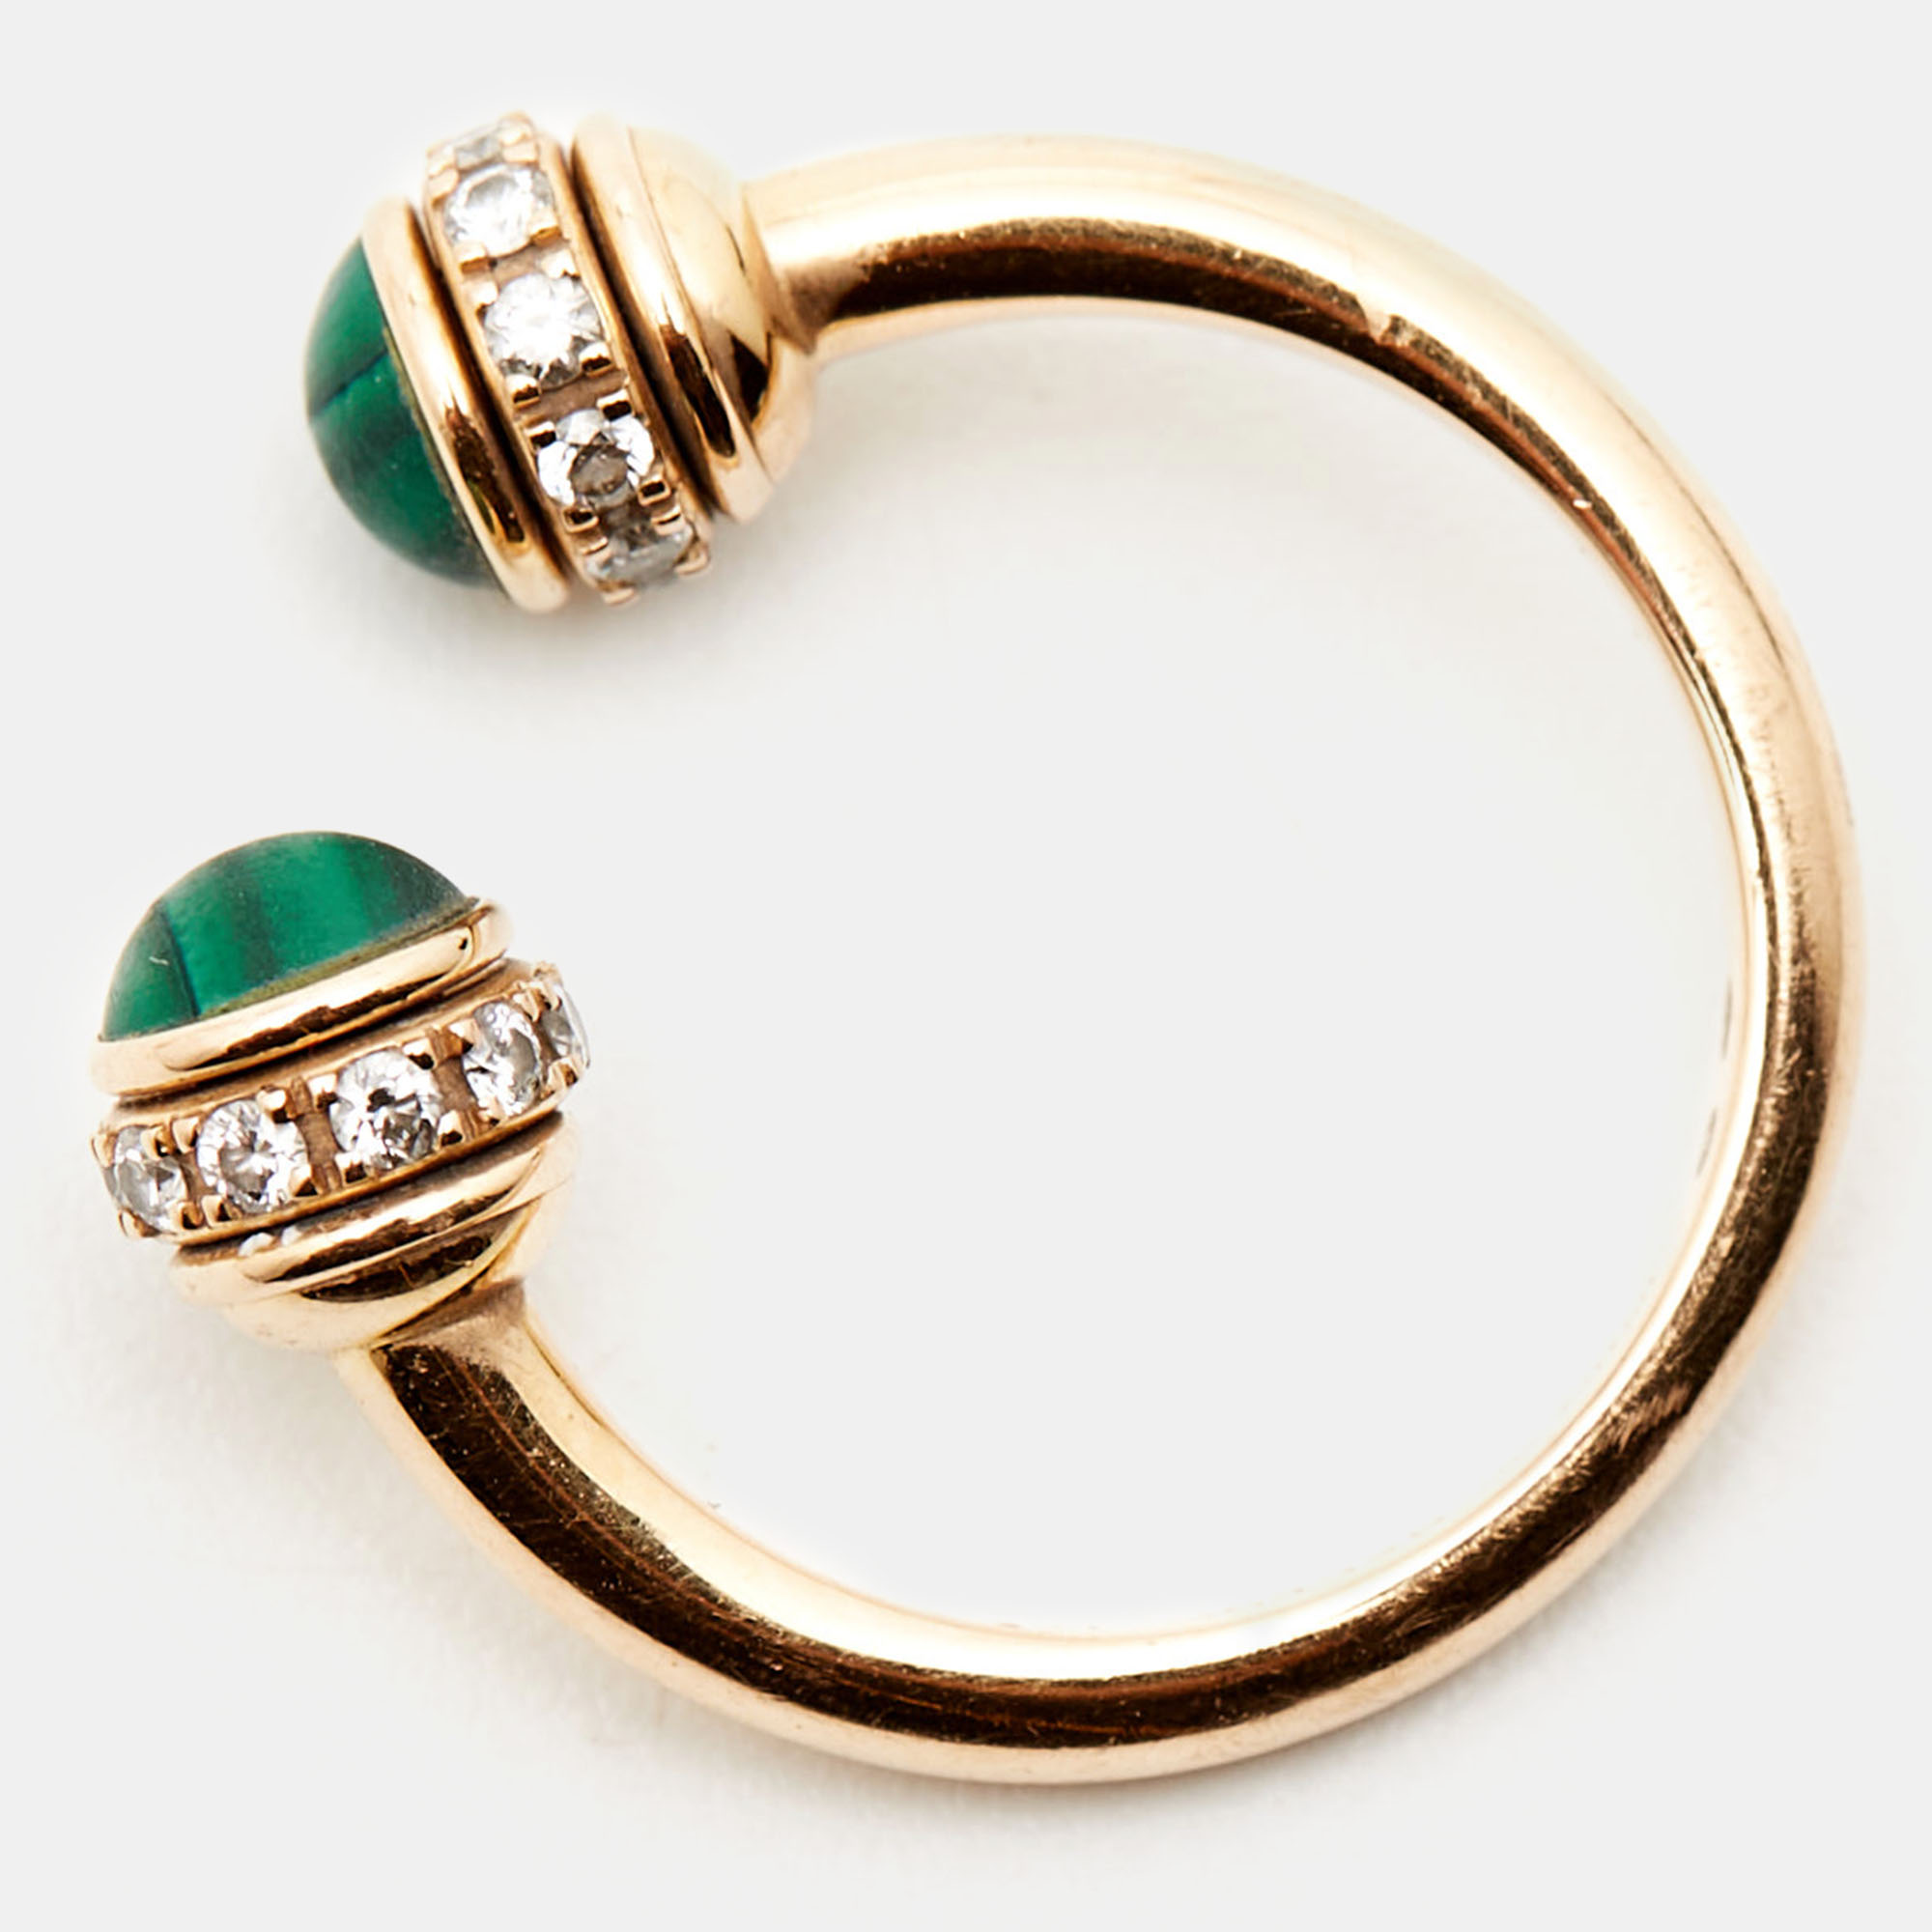 Piaget Possession Malachite Diamonds 18k Rose Gold Ring Size 48